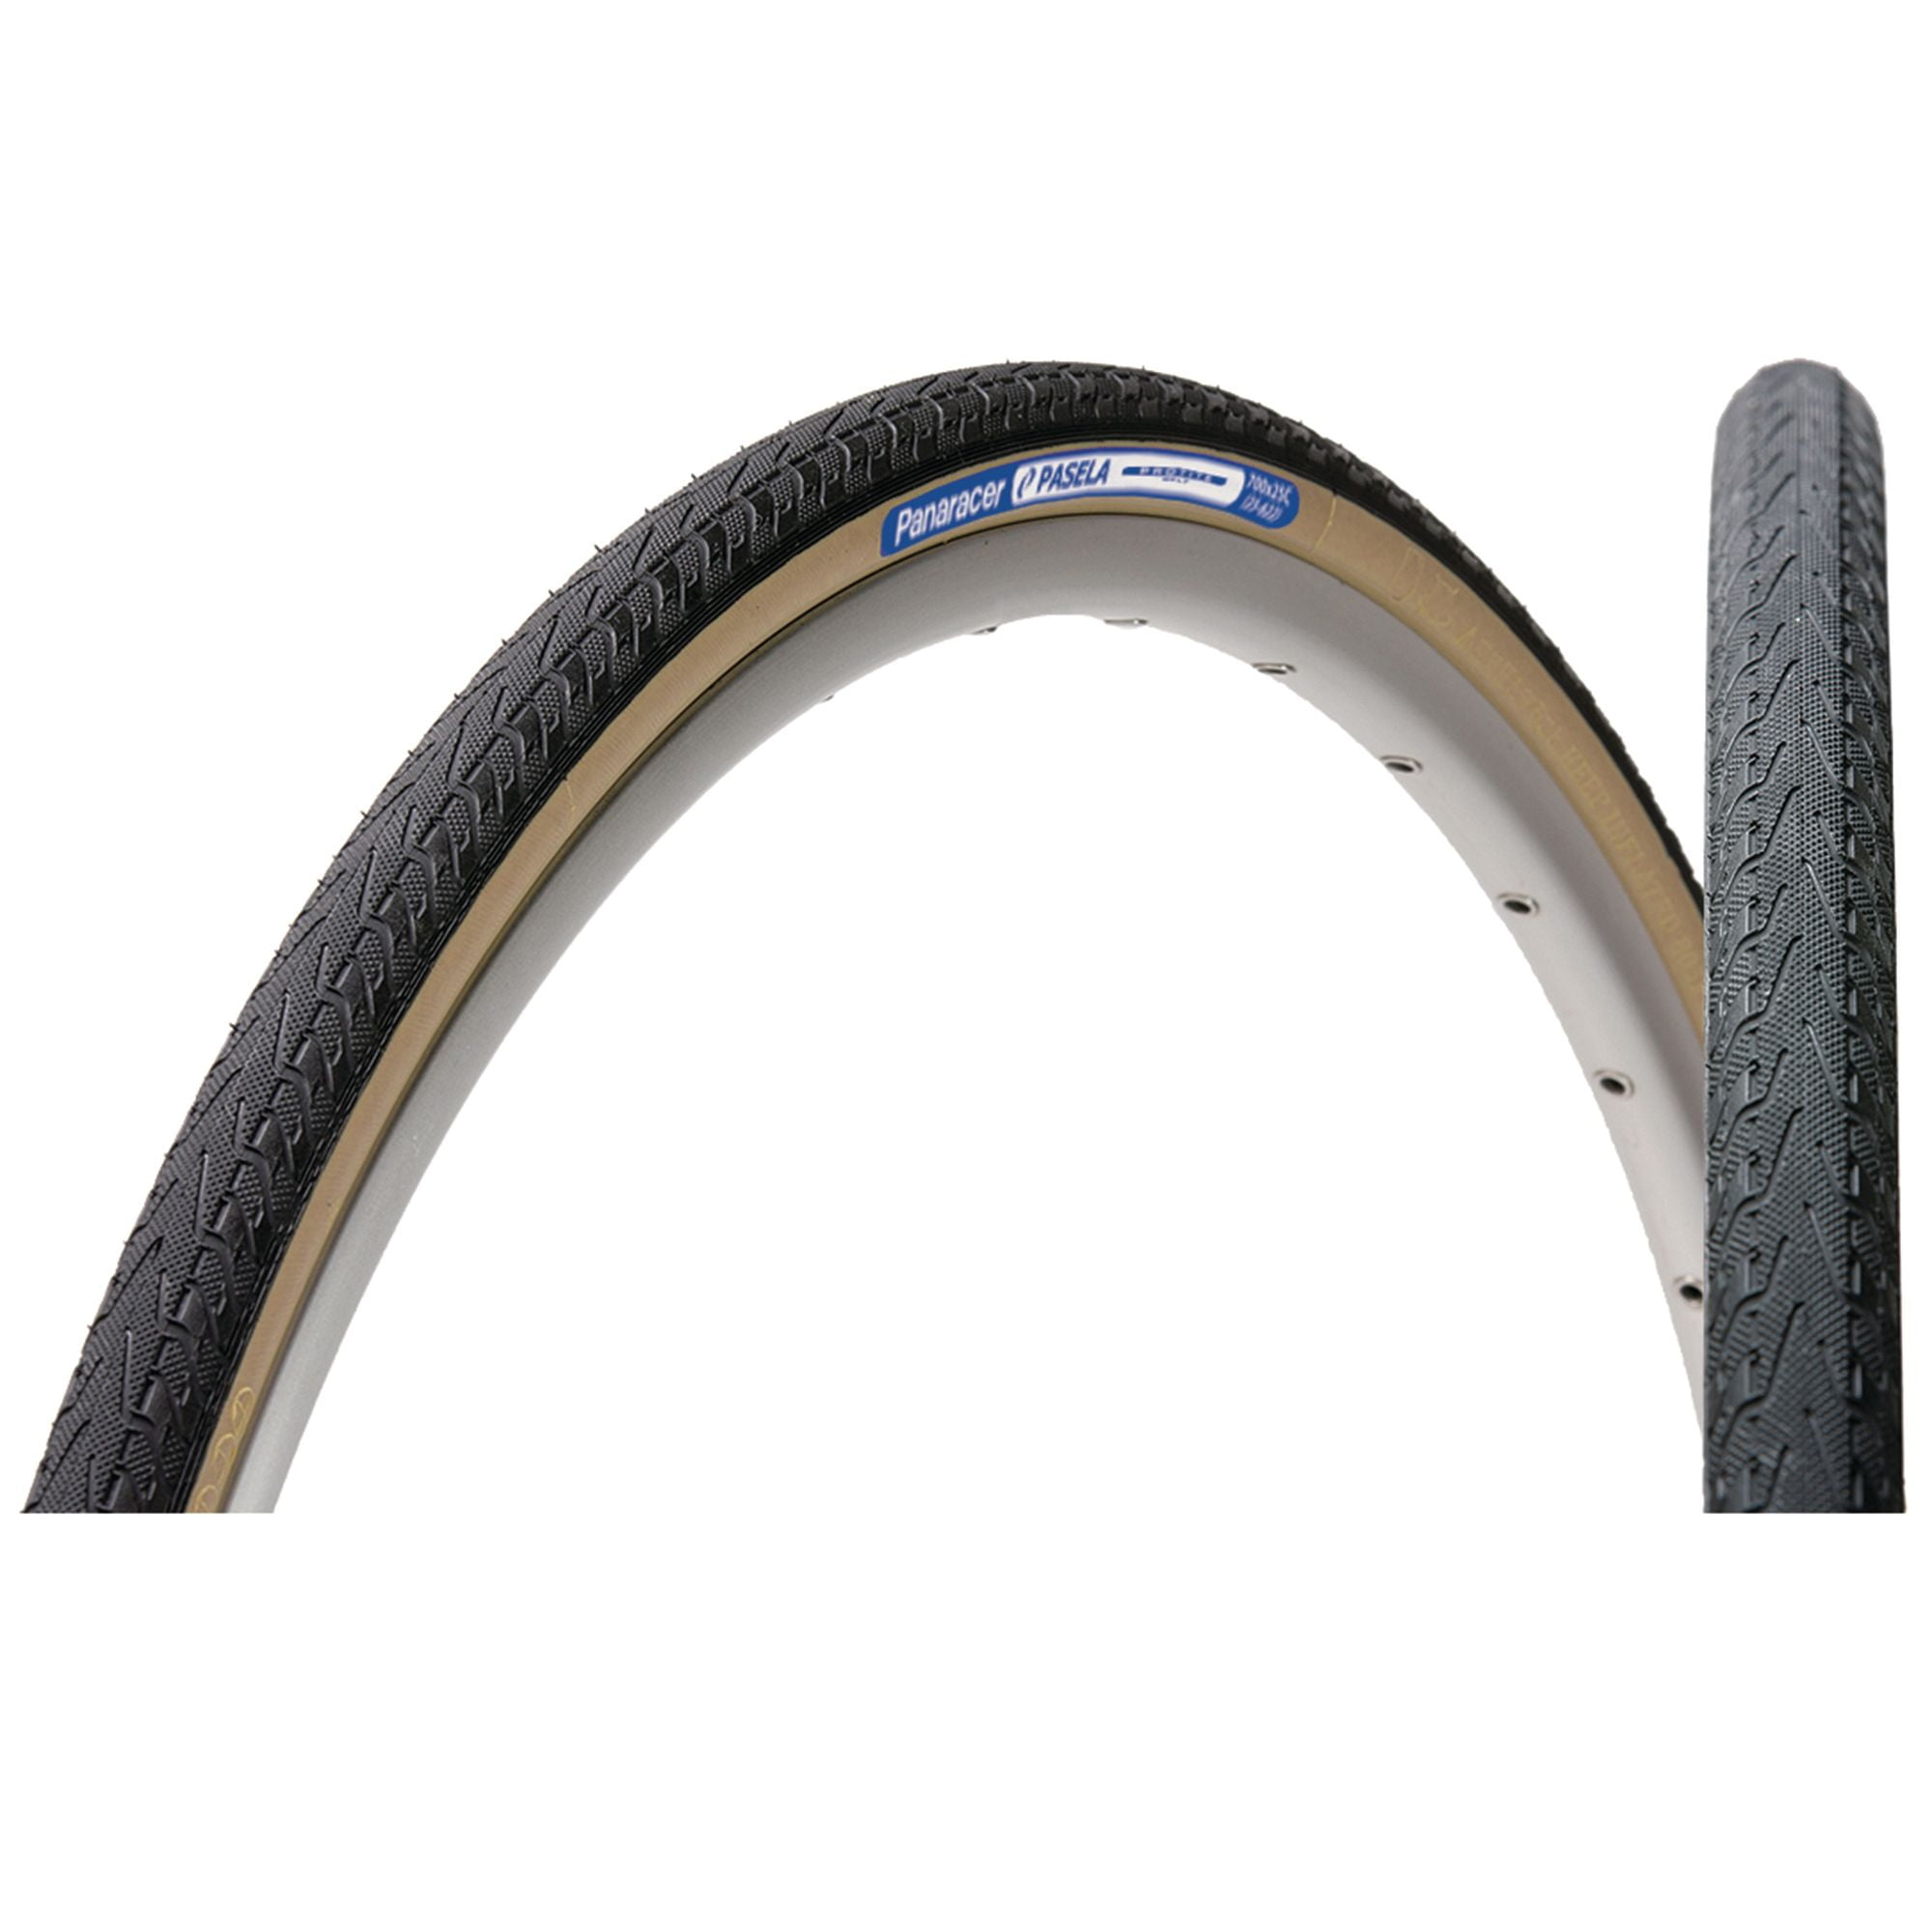 CST Comp 3 BMX Tyres 2x 20" x 1.75" Black w Skin Wall Tan Kids Bike Tir PAIR 